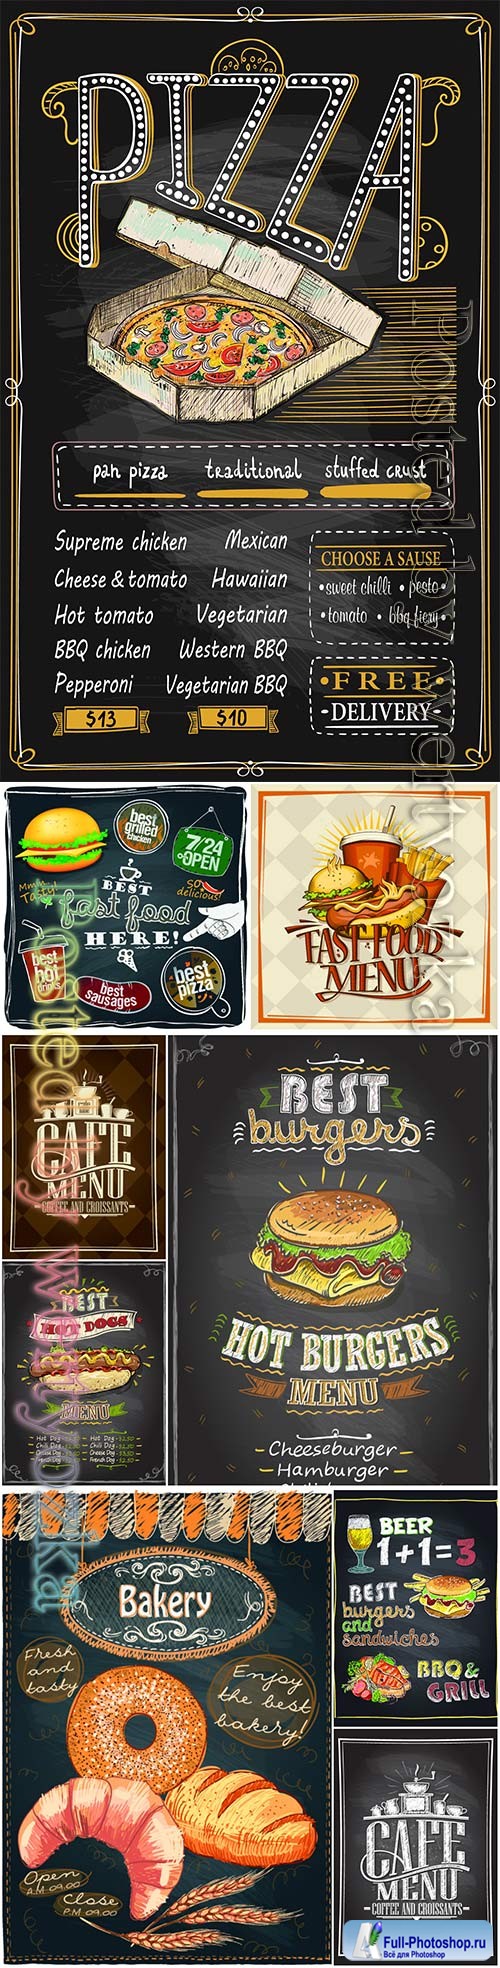 Cafe menu card design, fast food, pizza